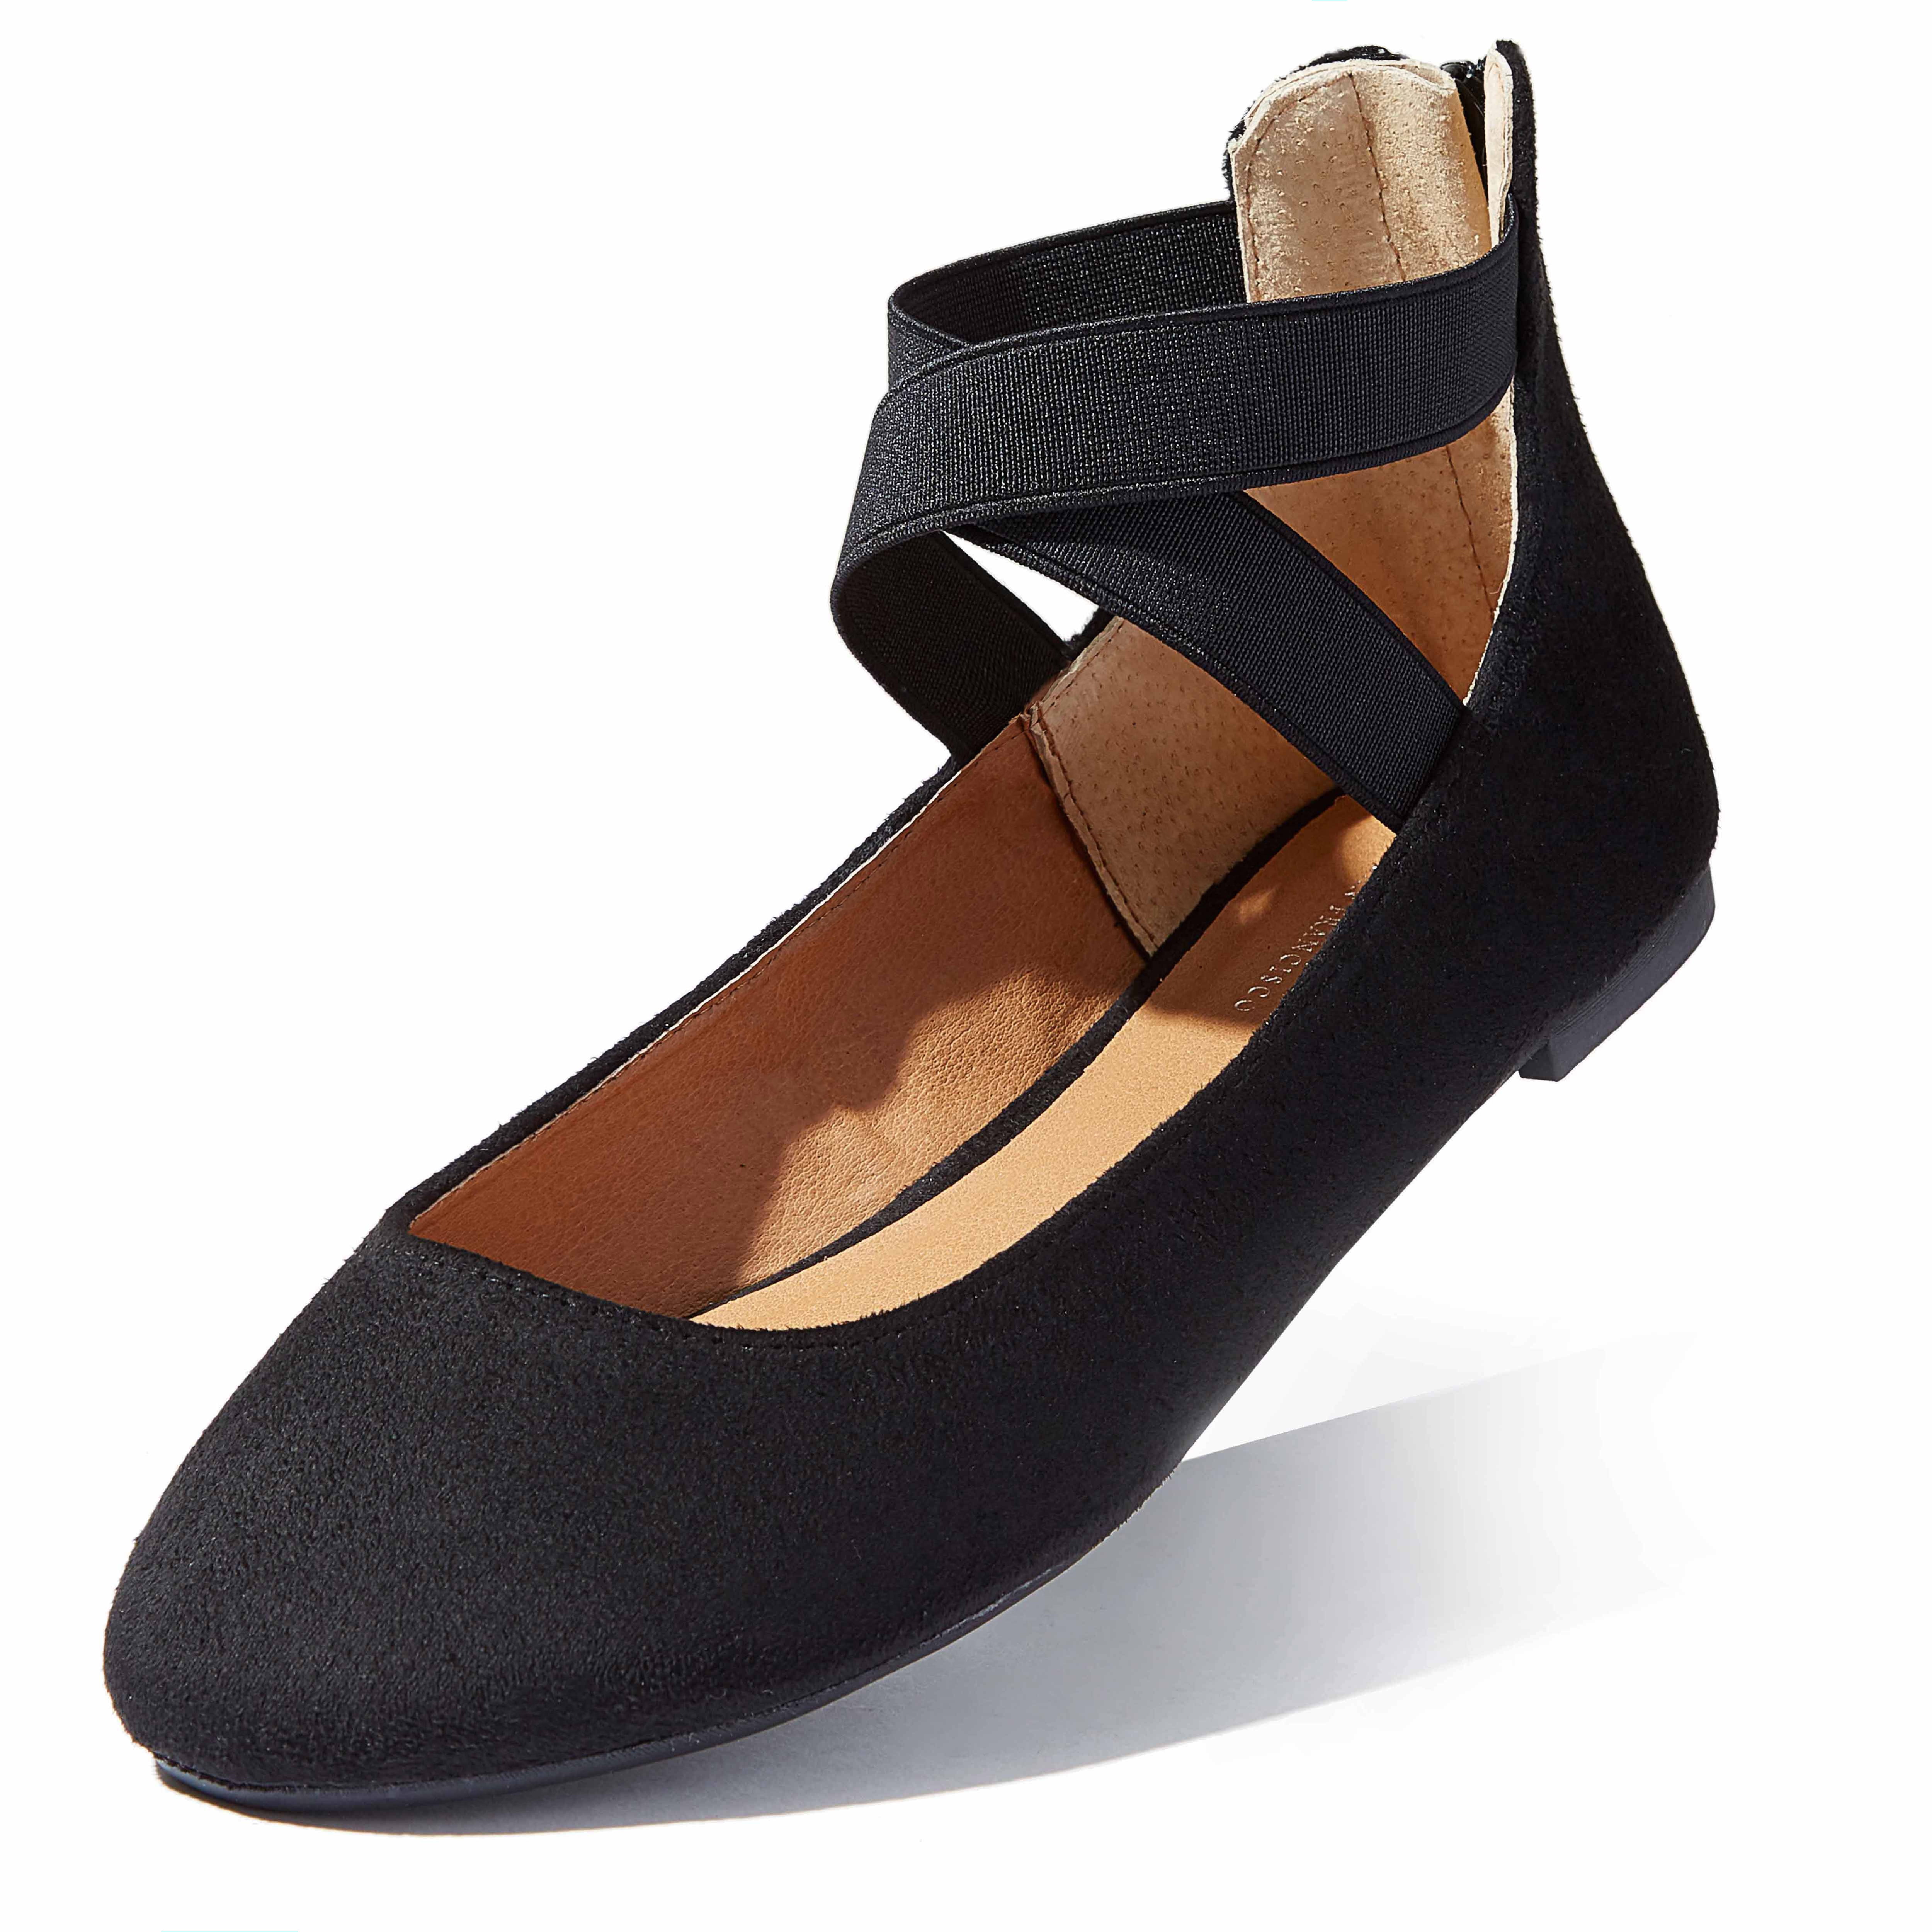 Buy > black ballet flat shoes > in stock